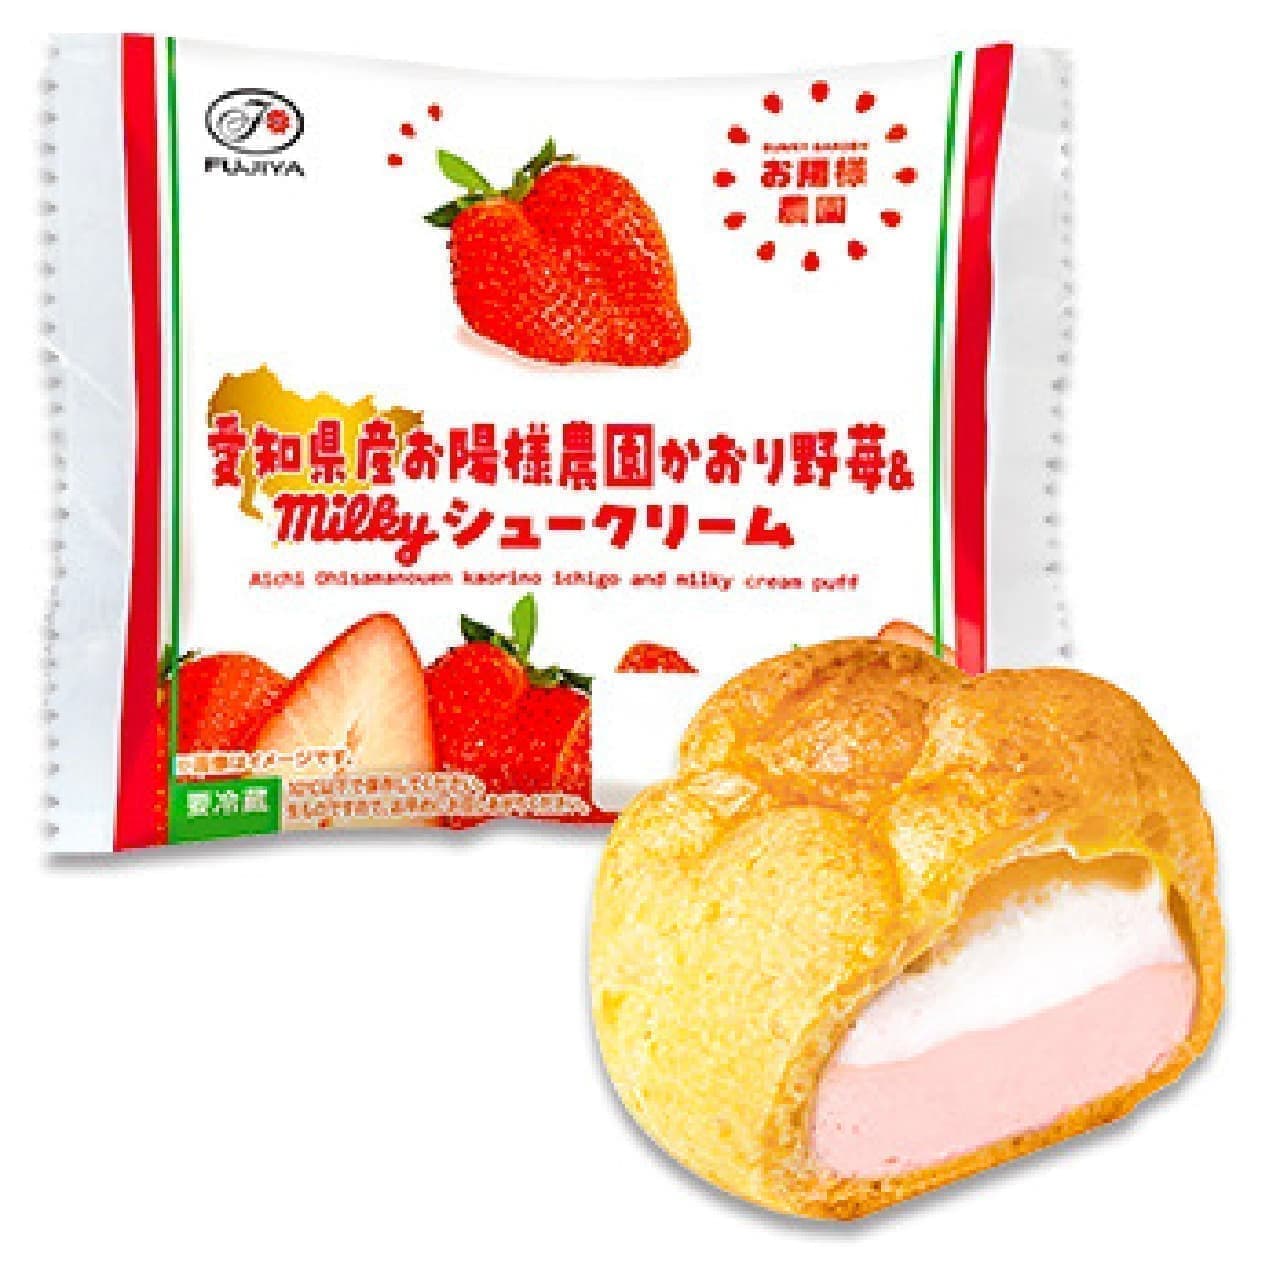 Aichi Oyosama Farm Kaorino Strawberry & Milky Cream Puff